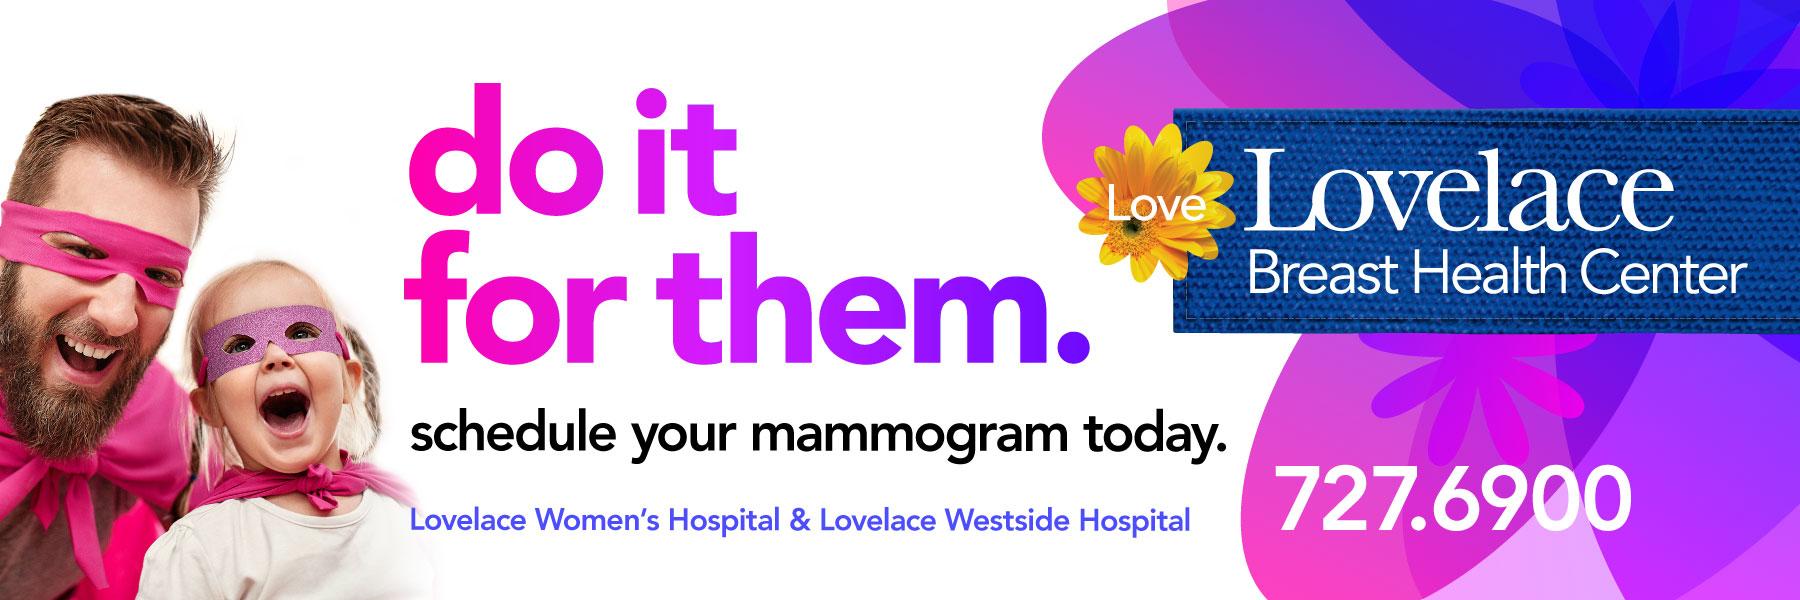 Schedule your mammogram today